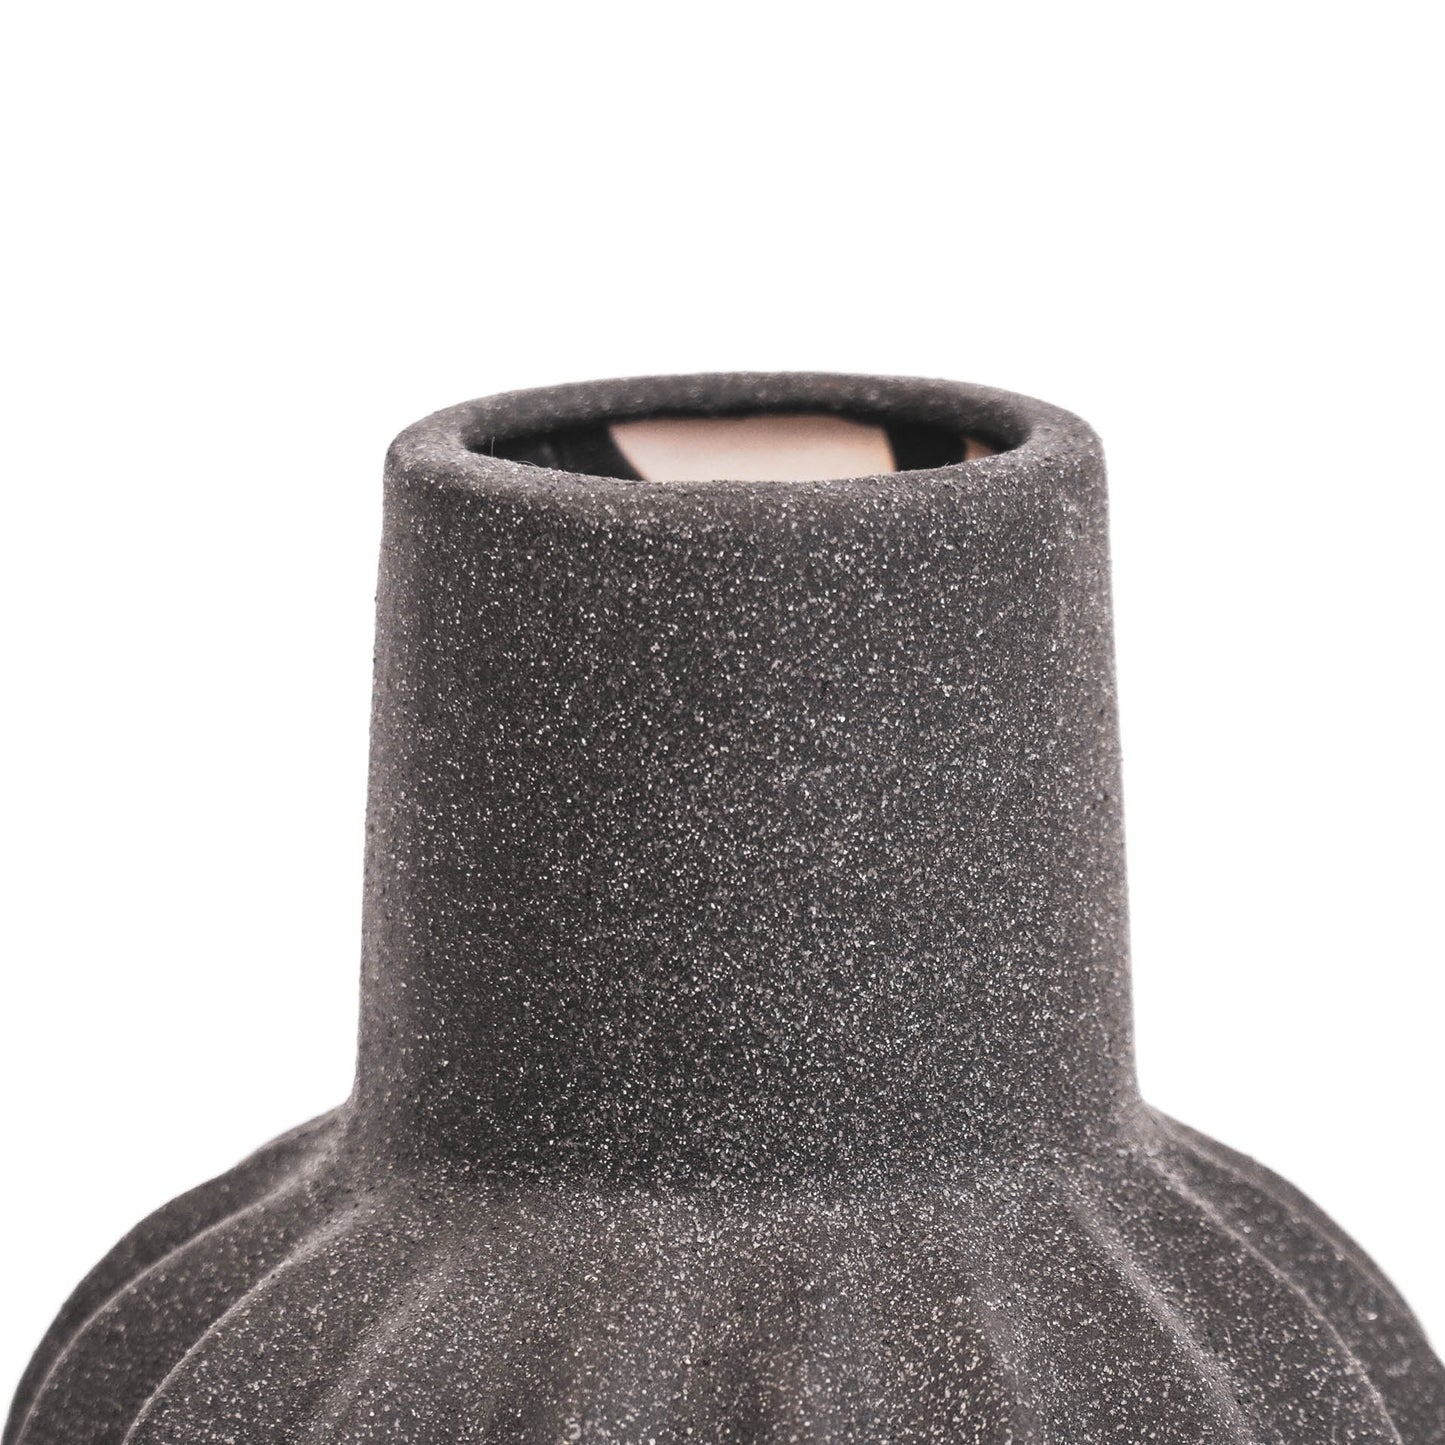 HV Organic Shape Vase - Black-15x15x24